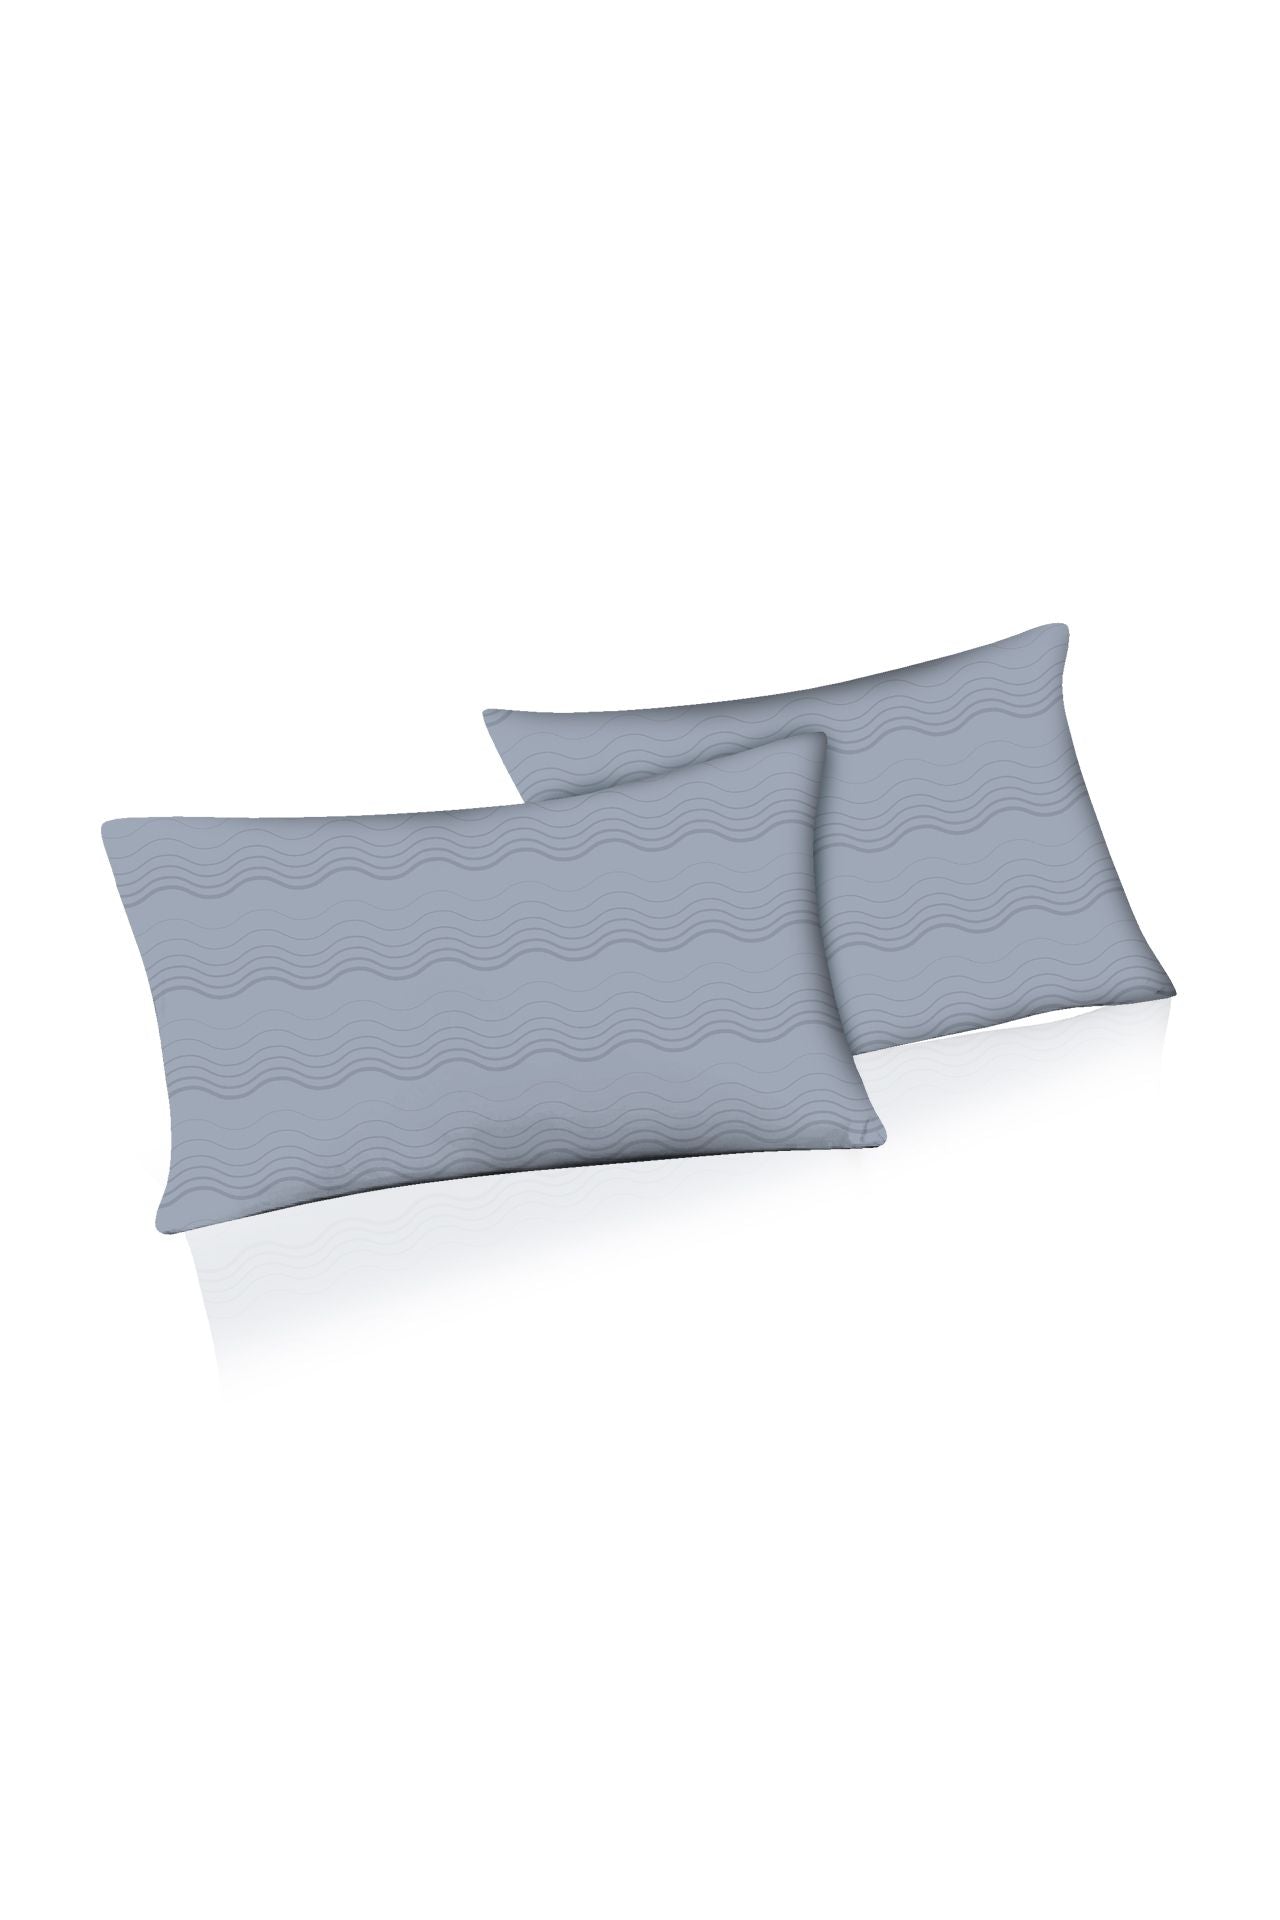 "printed throw pillows" "Kyle X Shahida" "washable throw pillows" "light gray pillow casess"